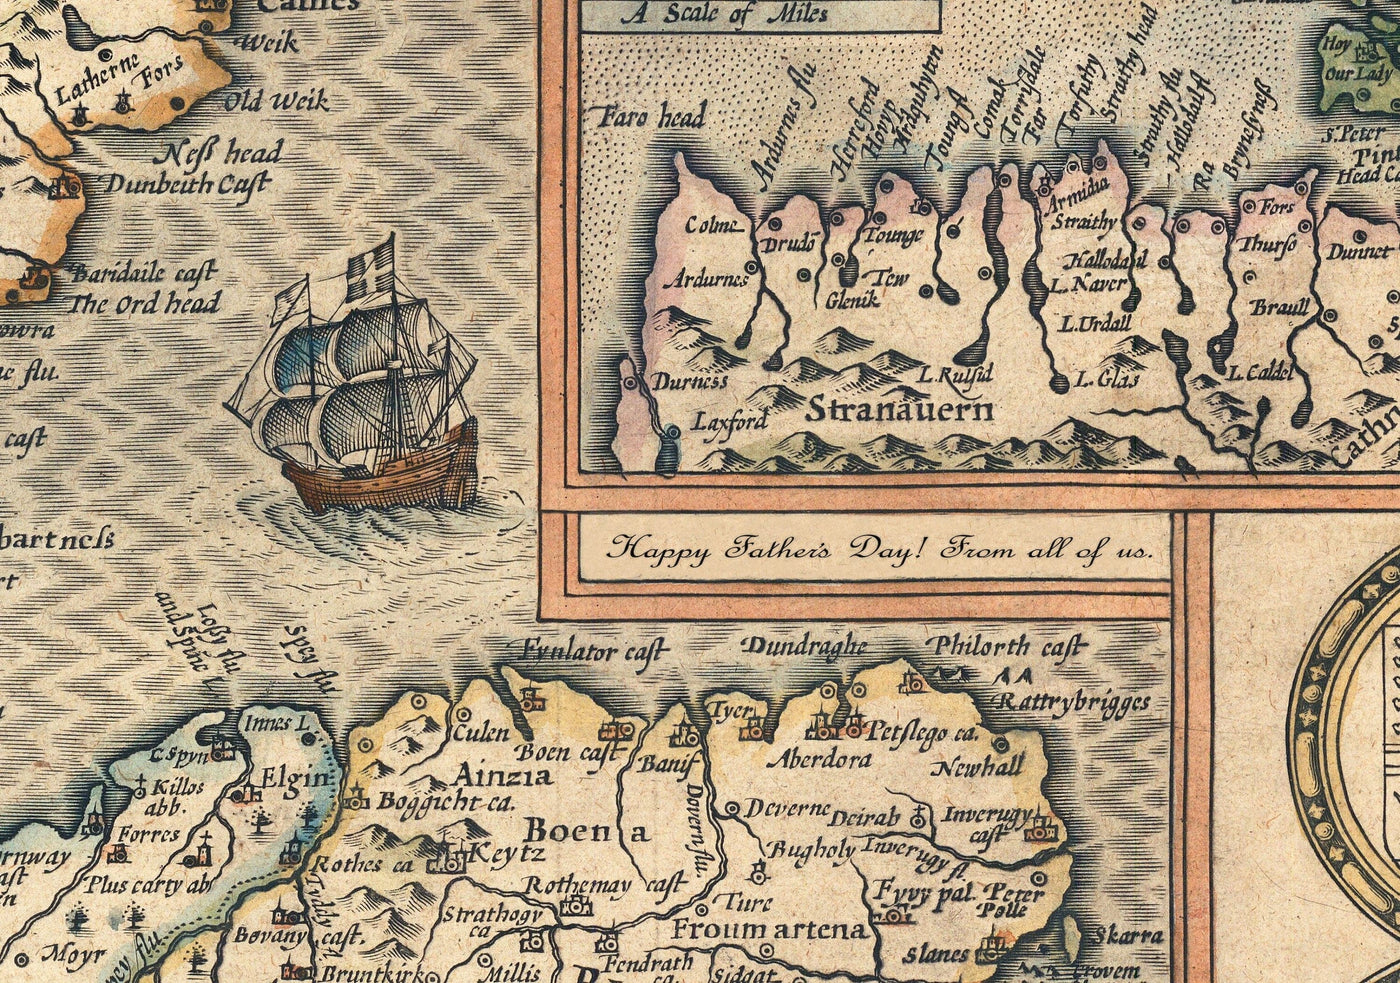 Antiguo mapa de la India y el Sudeste Asiático, 1676 por John Speed - Pakistán, Tailandia, China, Indonesia, Taiwán